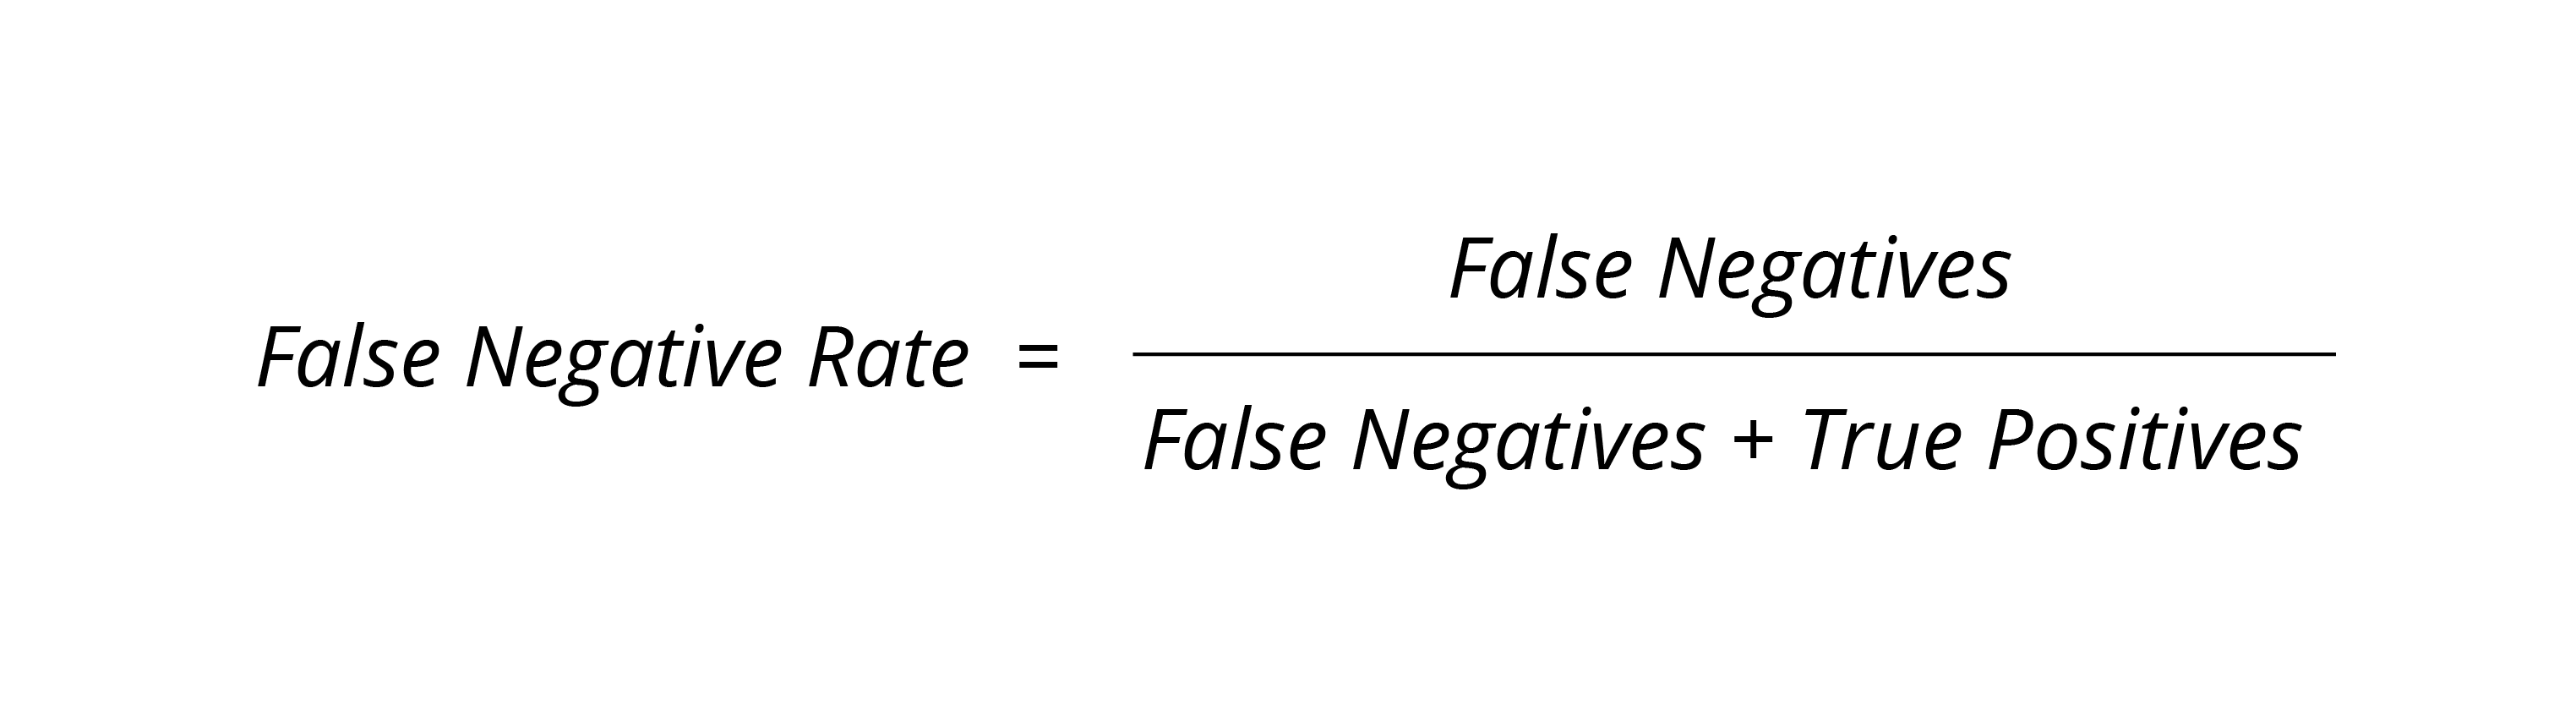 False negative rate equals to false negatives divided by the sum of false negatives and true positives